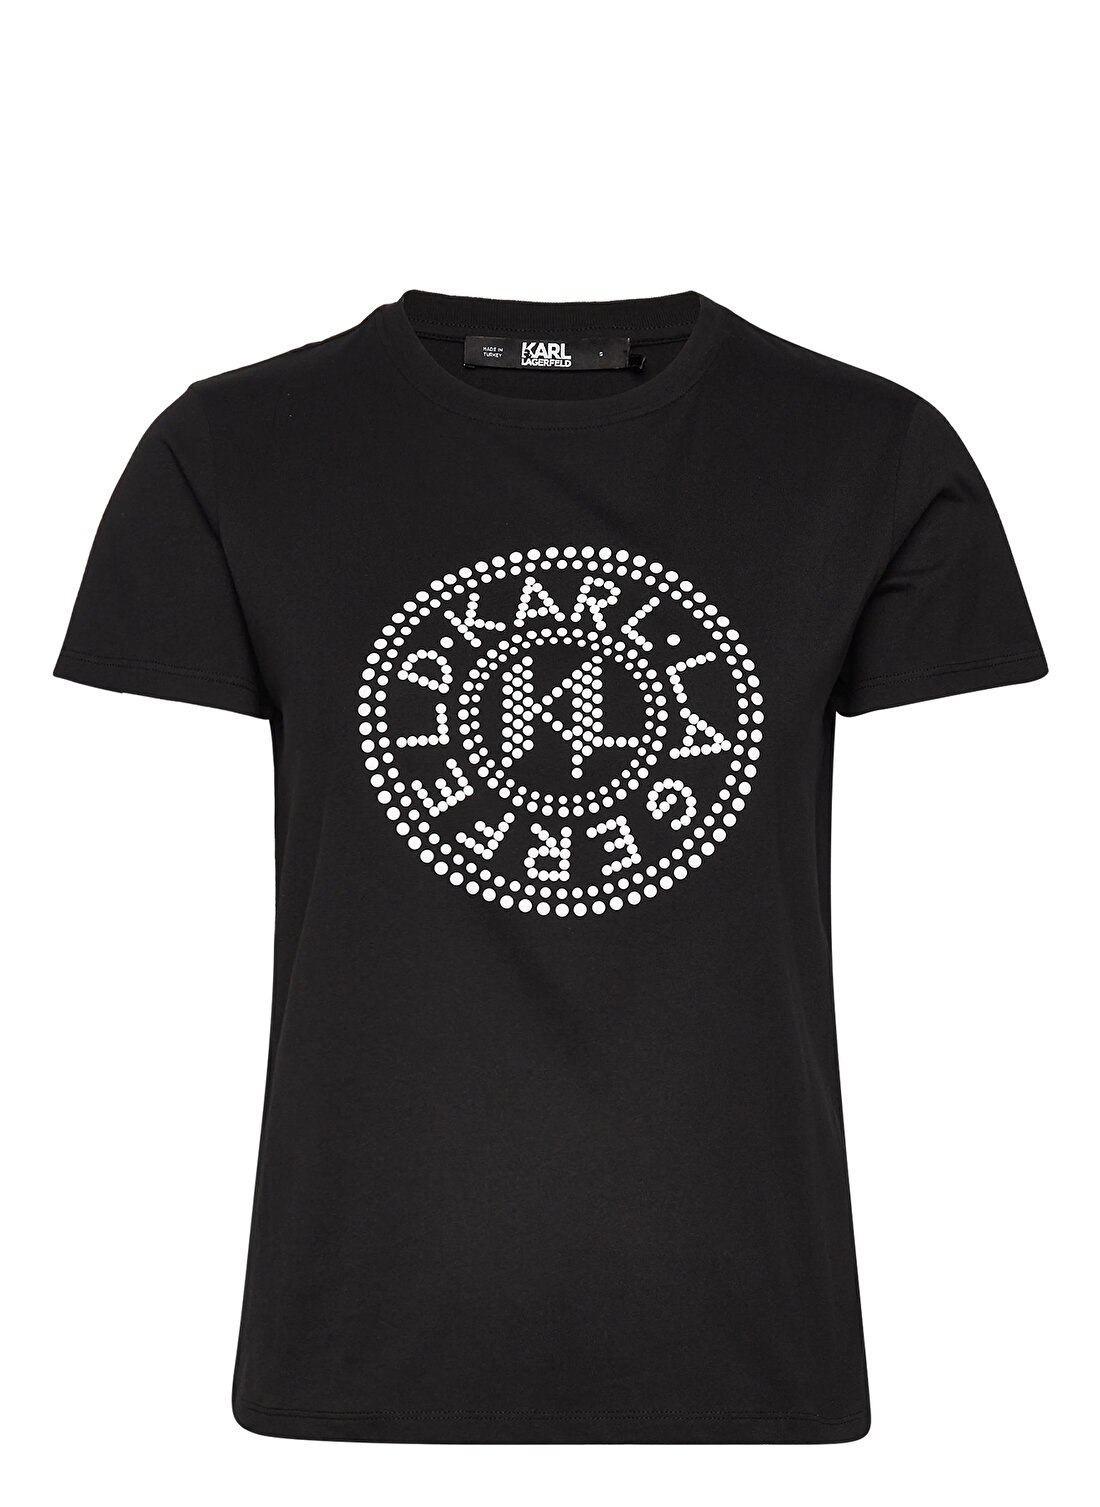 KARL LAGERFELD Bisiklet Yaka Baskılı Siyah Kadın T-Shirt 231W1712